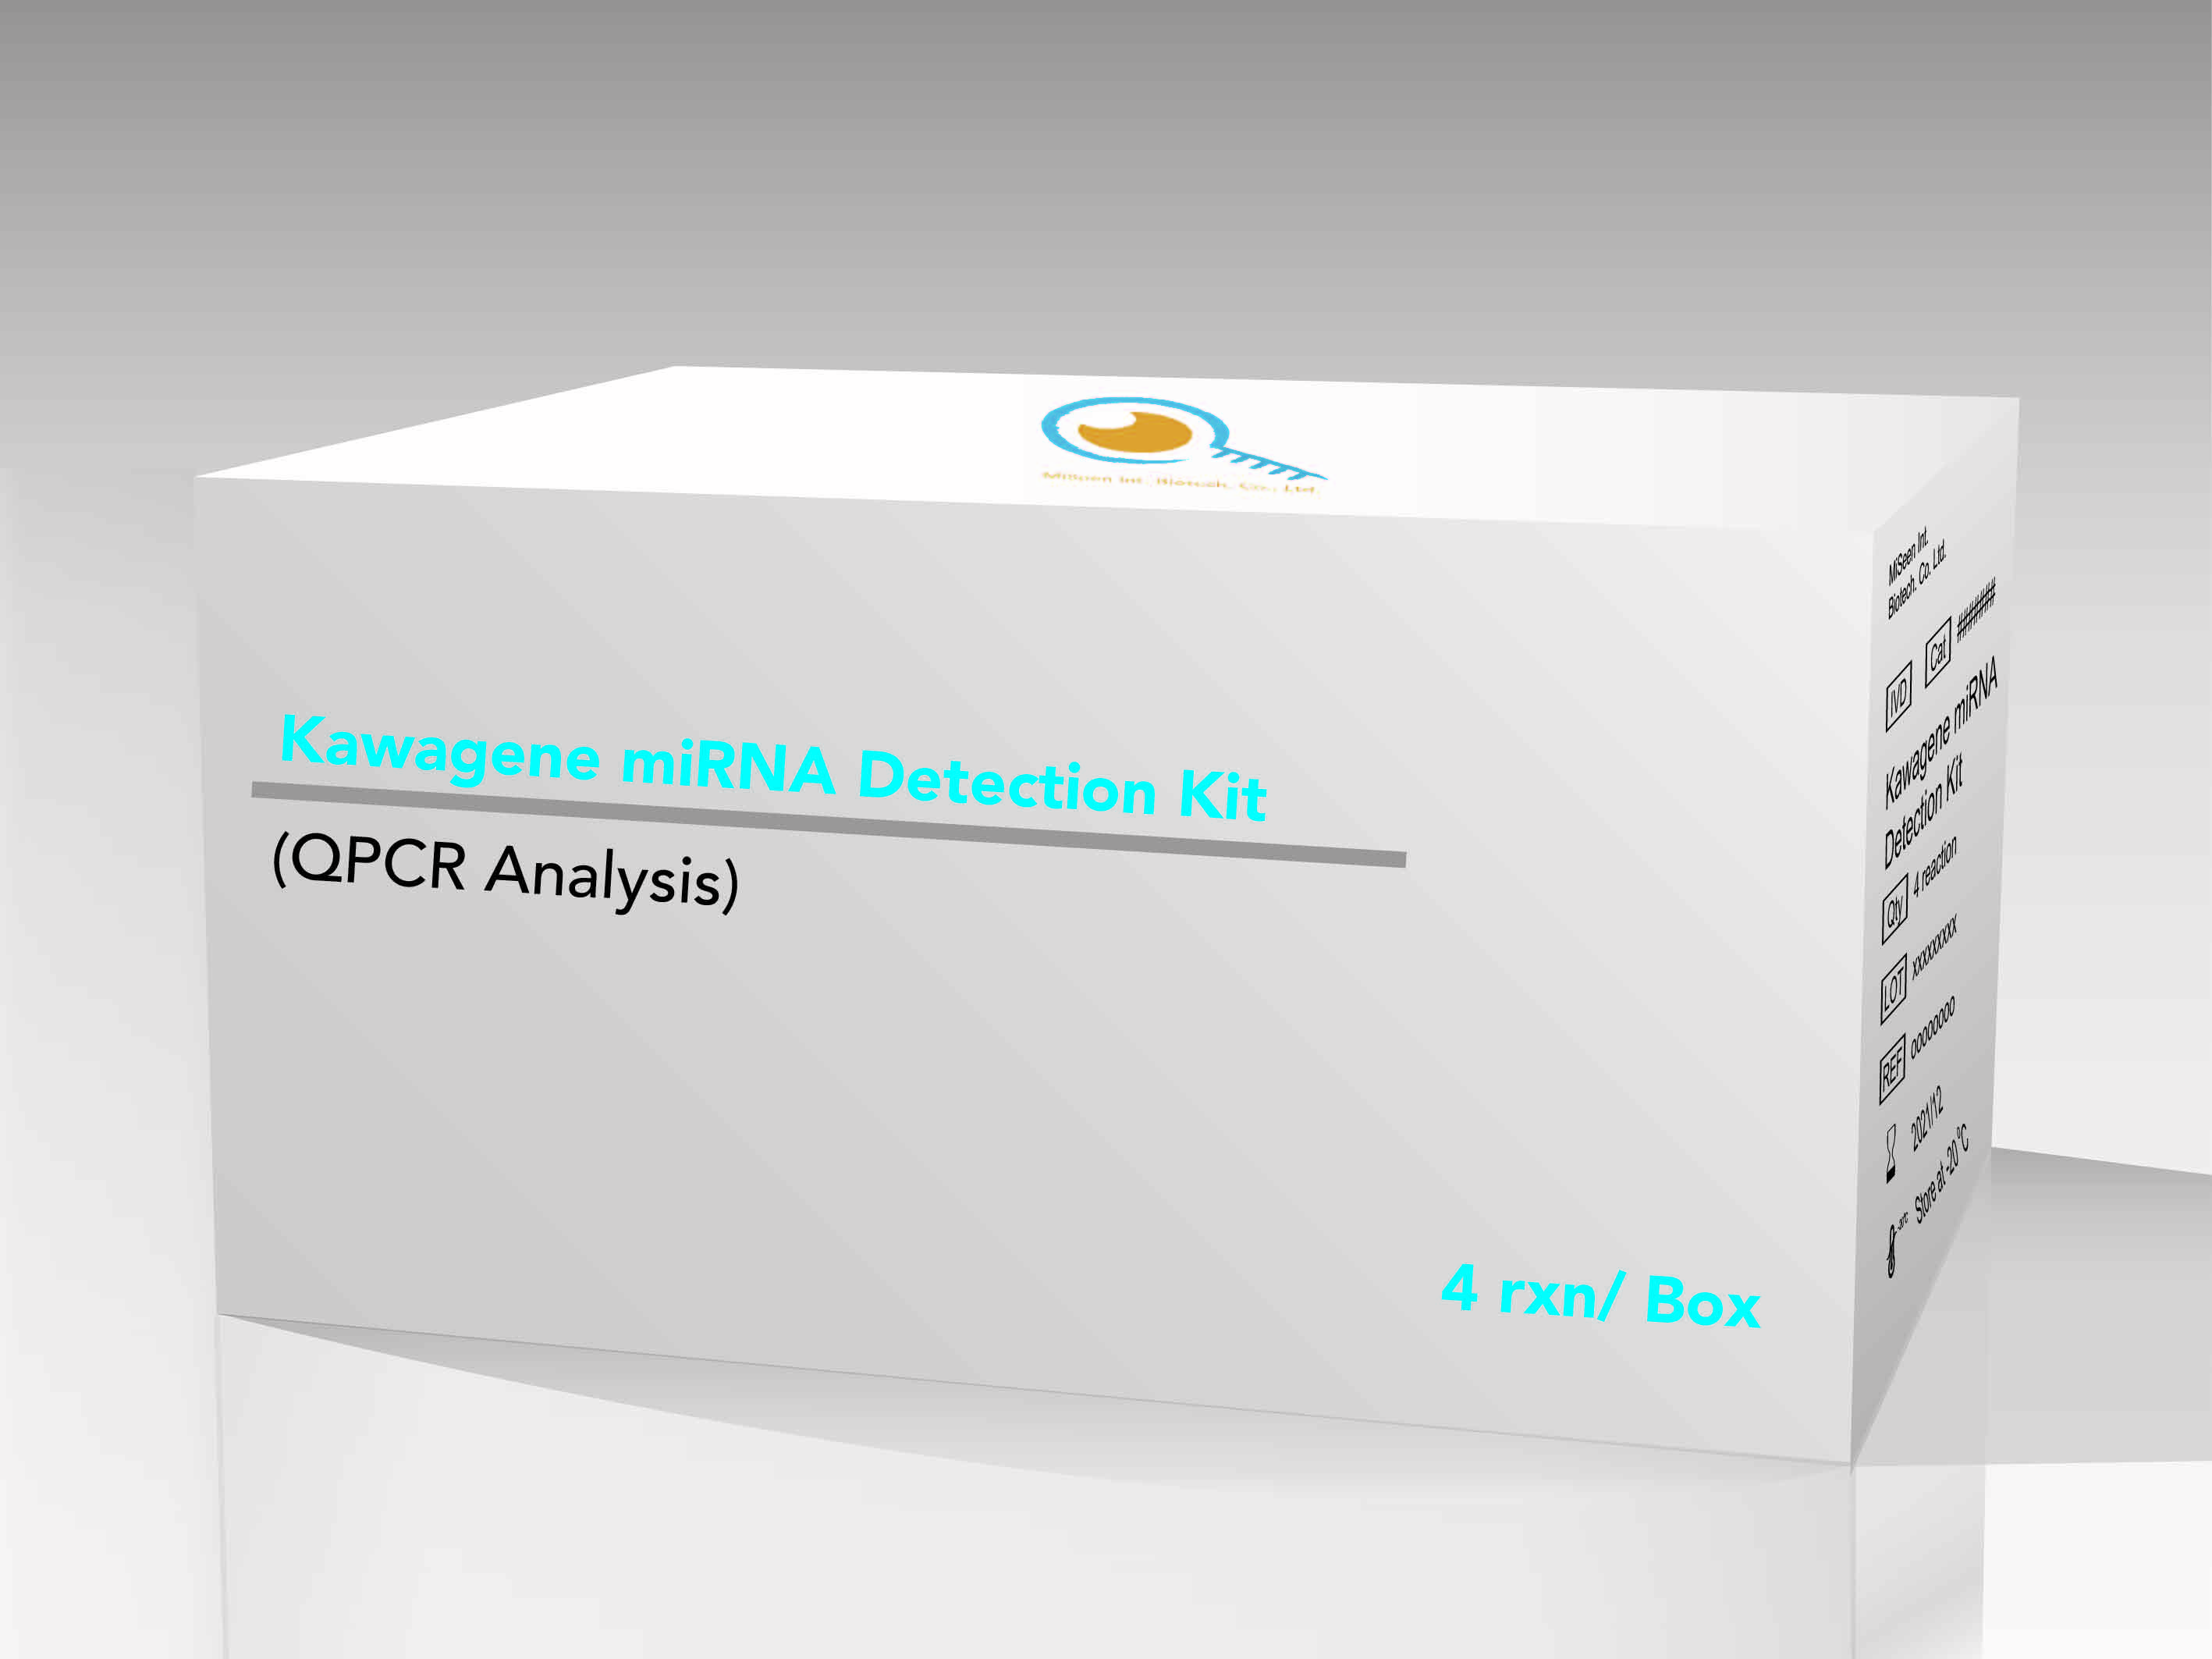 miRNA multiplex detection platform